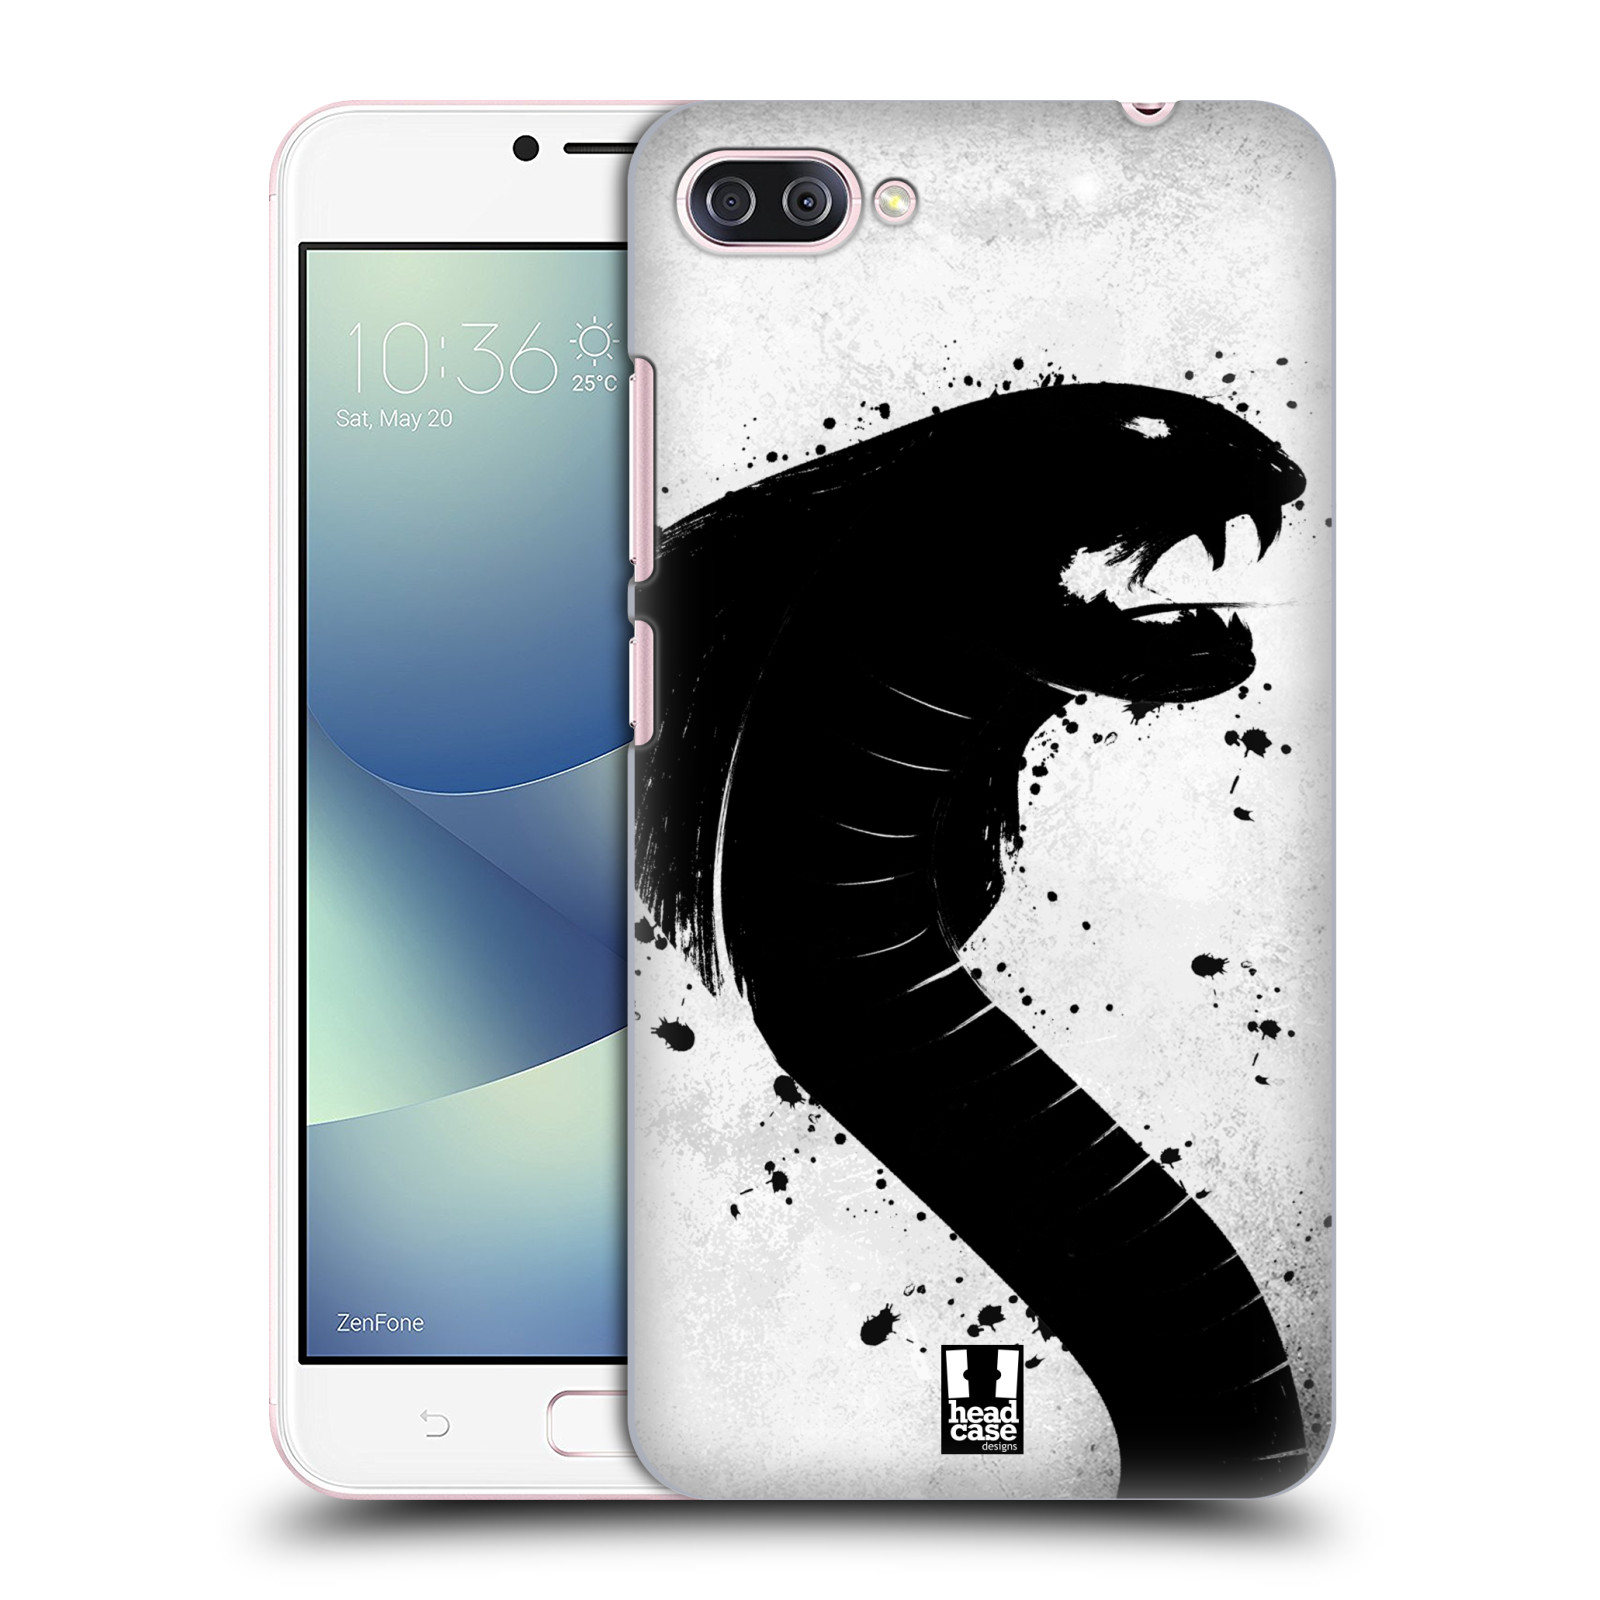 HEAD CASE plastový obal na mobil Asus Zenfone 4 MAX ZC554KL vzor Kresba tuš zvíře had kobra